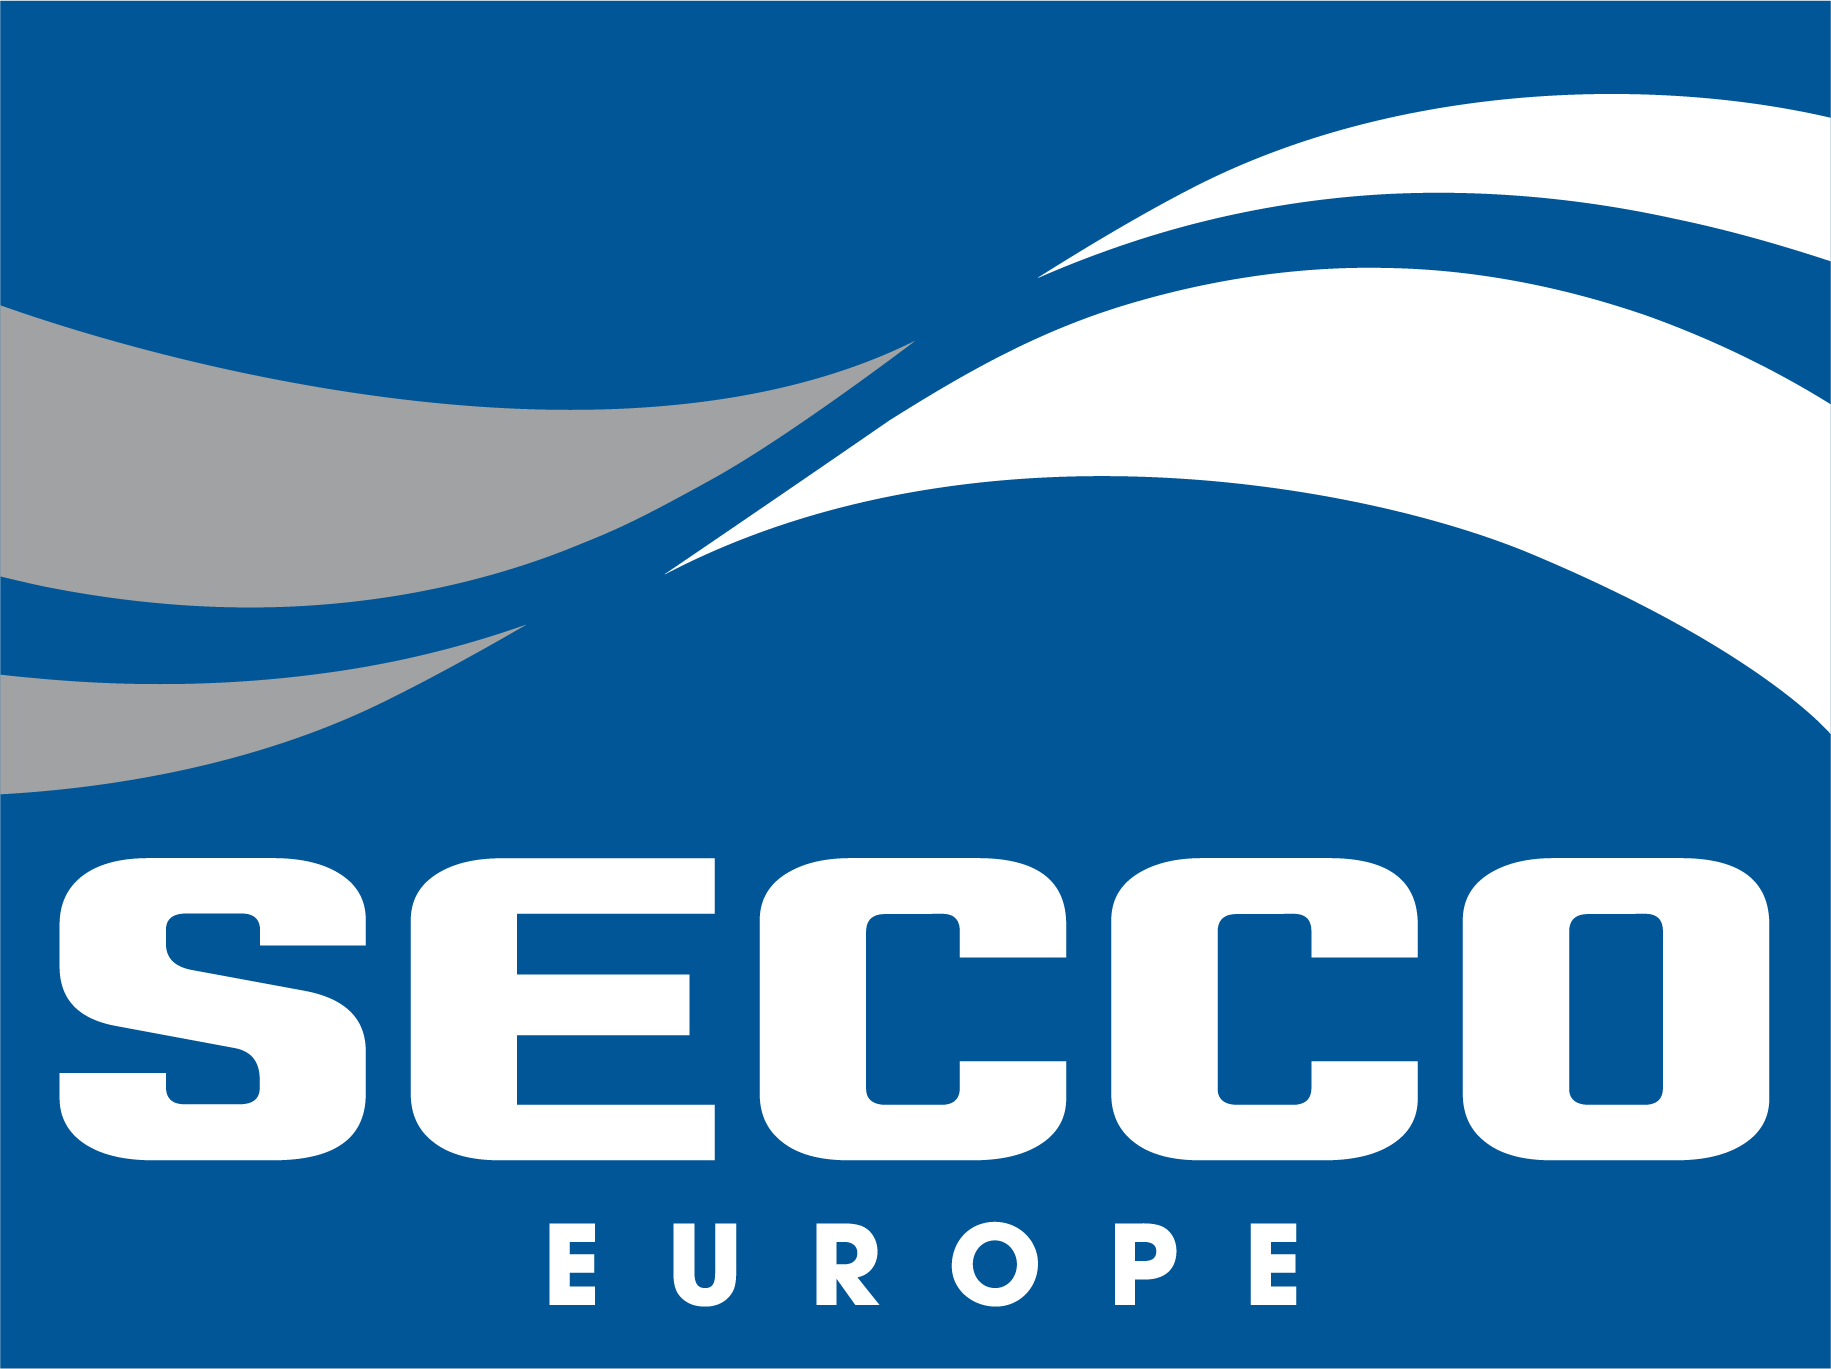 Secco_Europe_Official_RGBtransparent